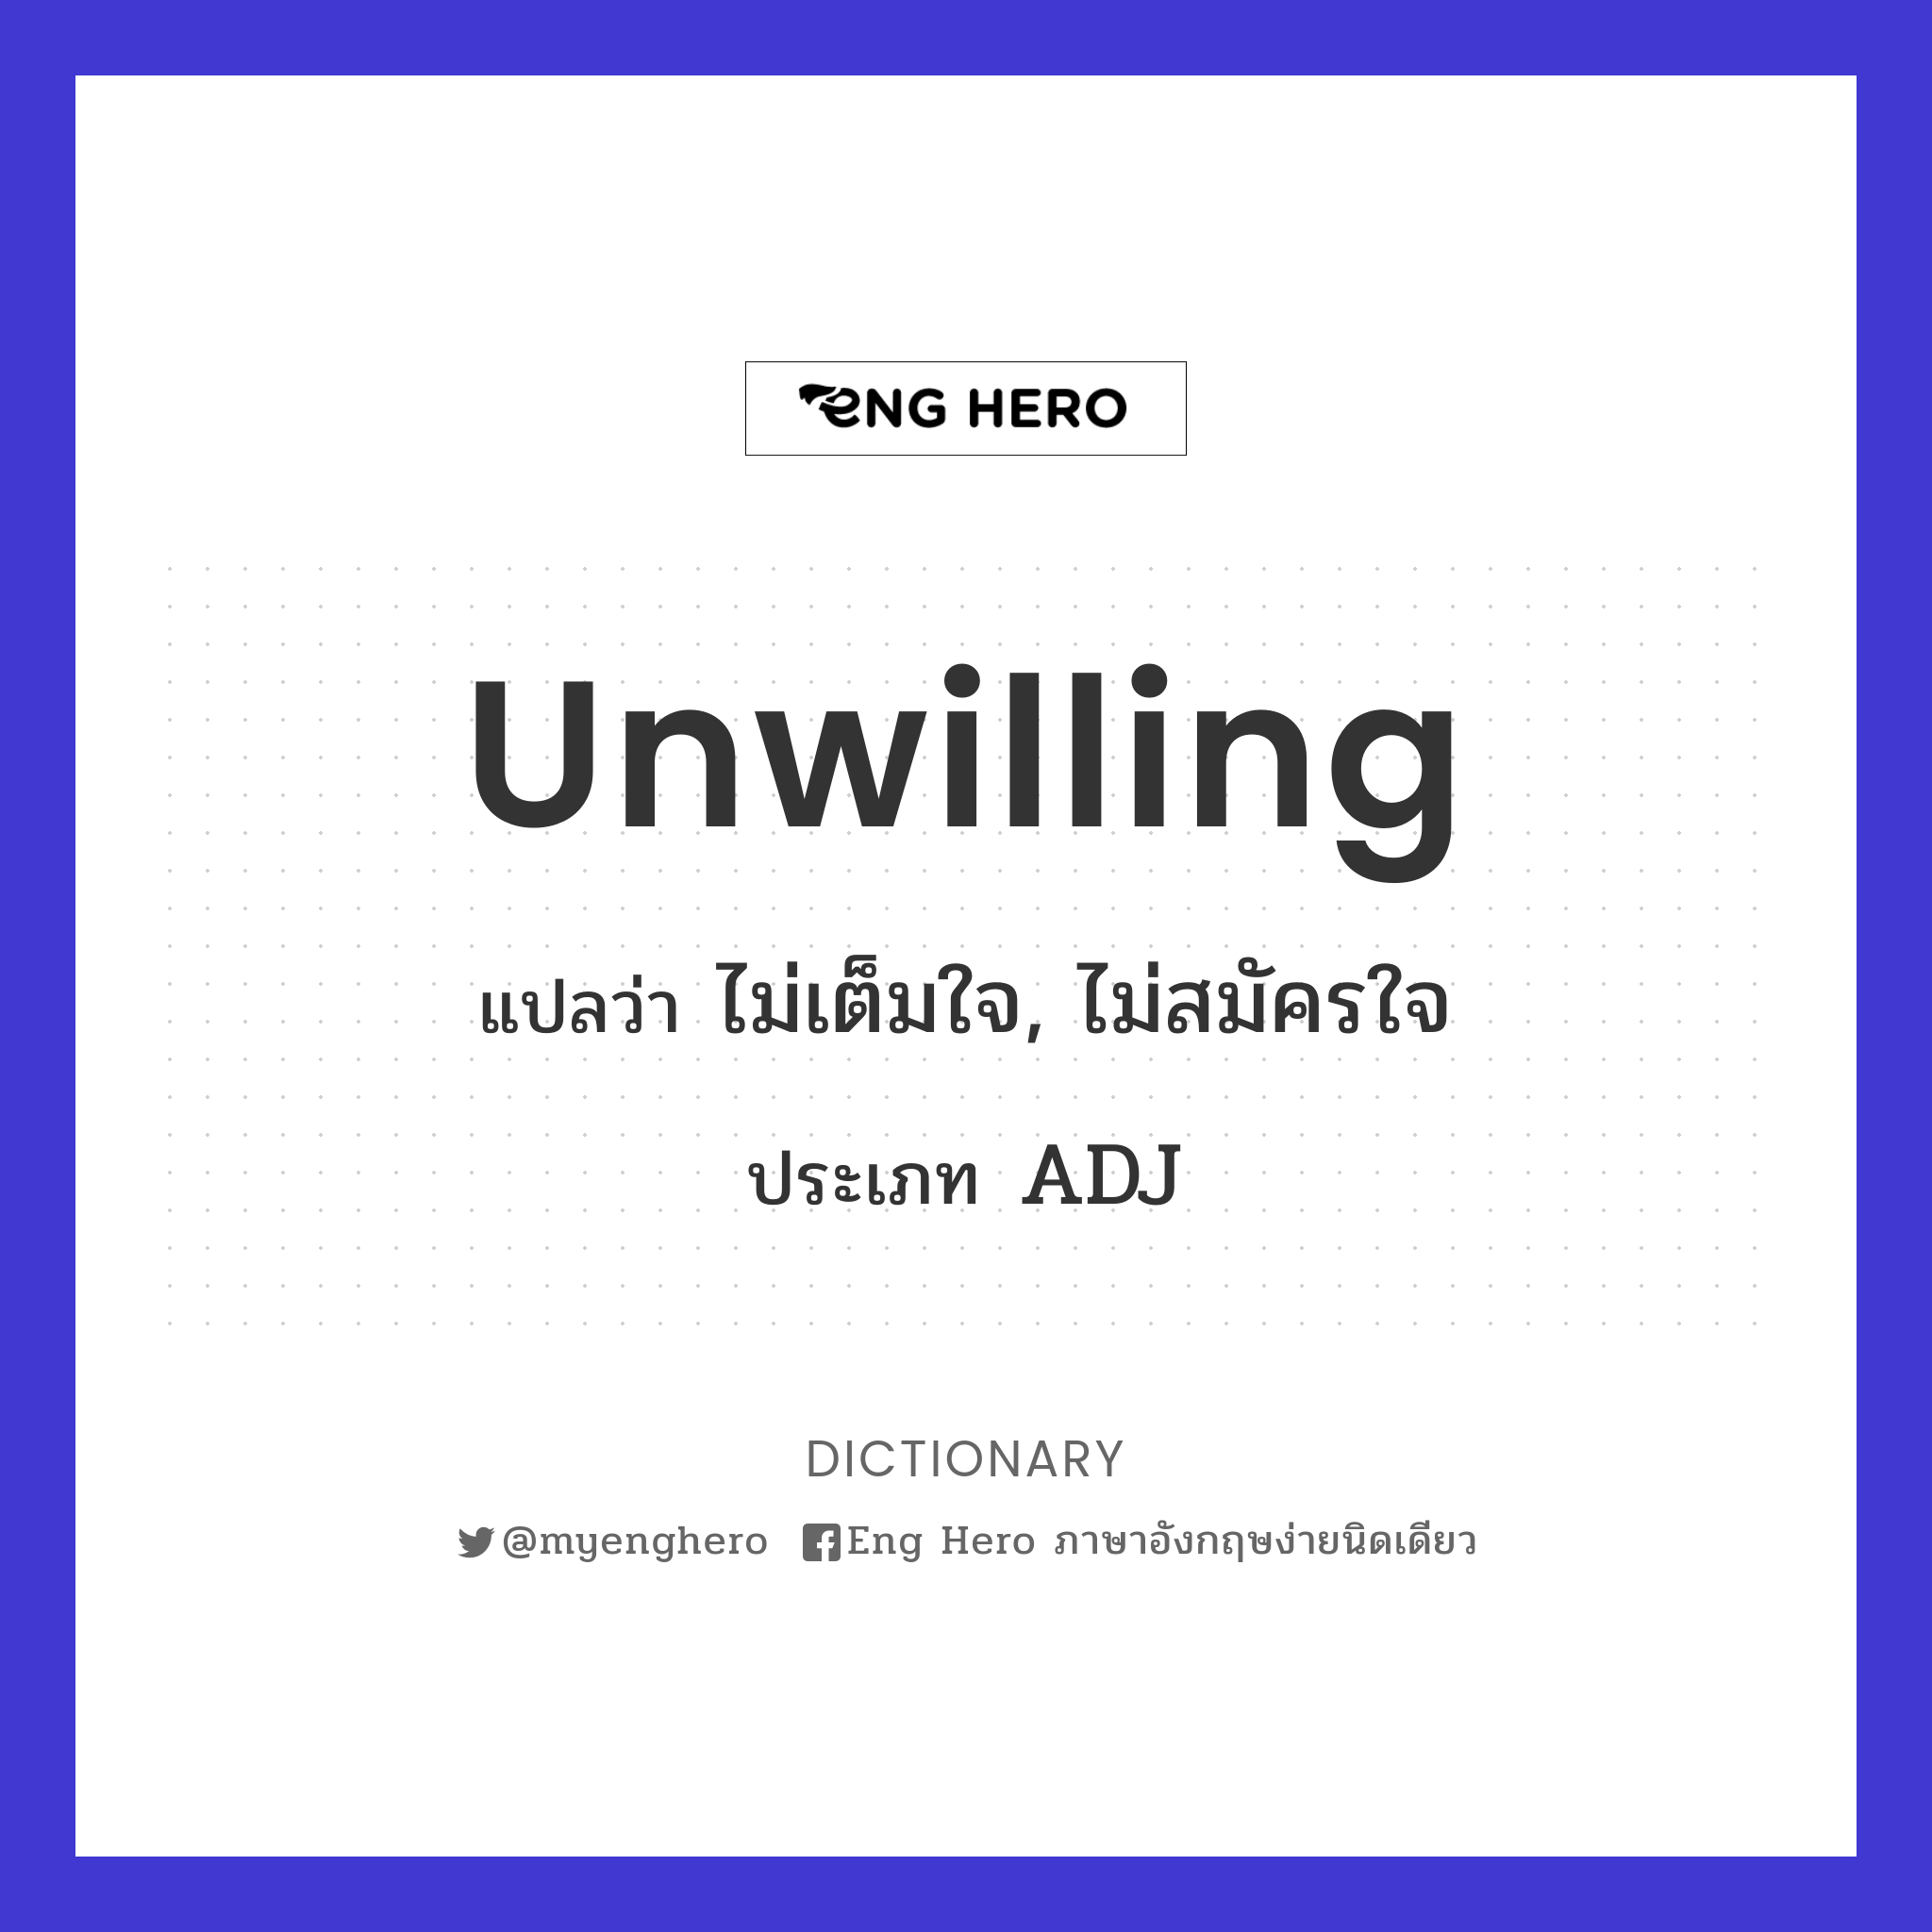 unwilling